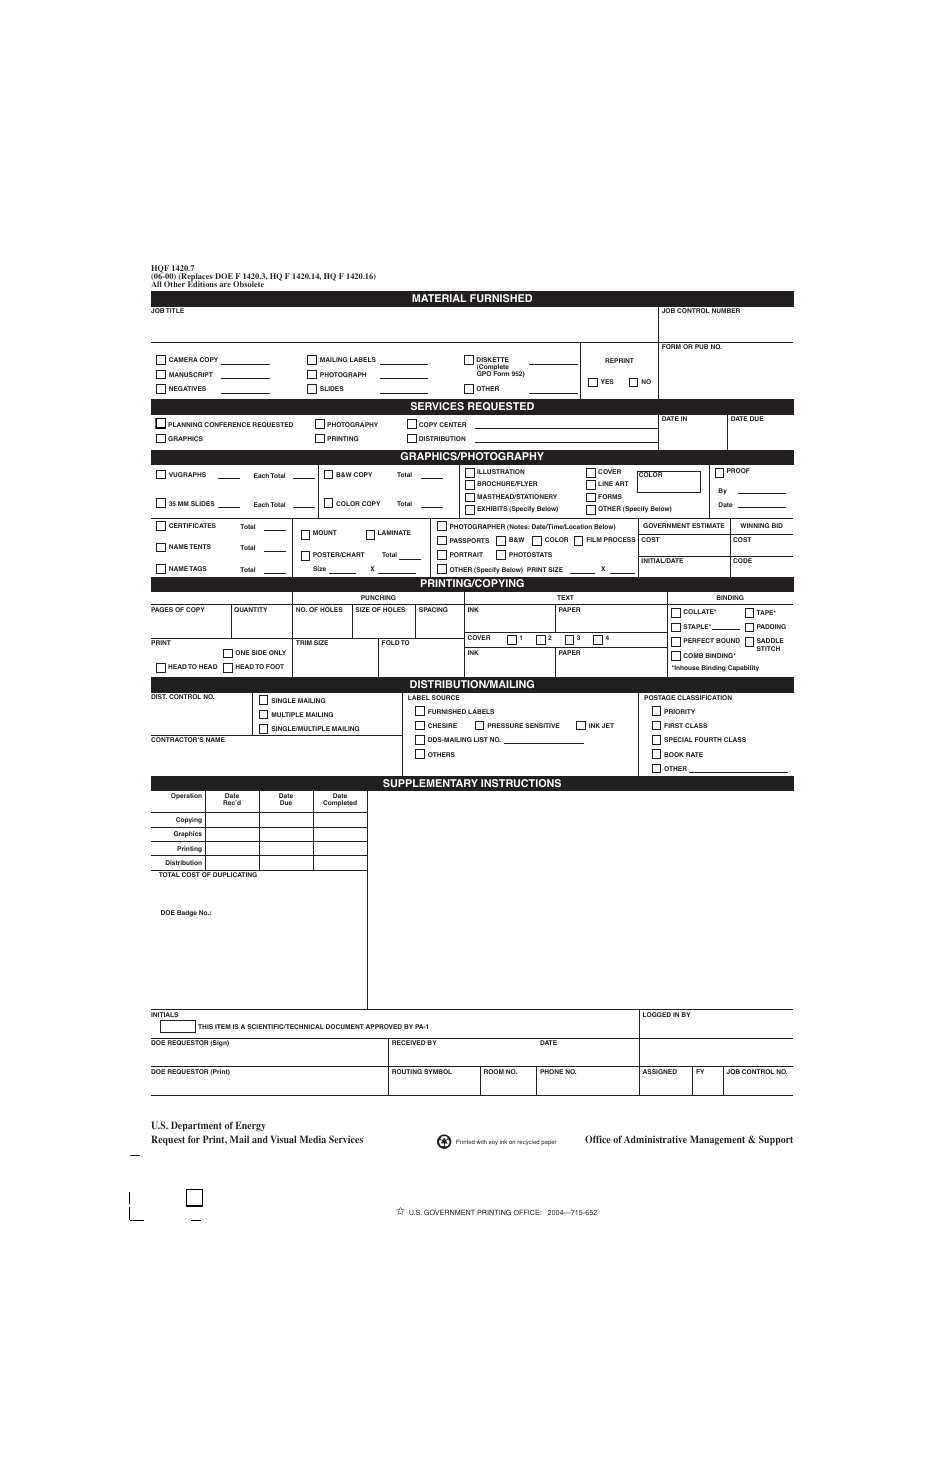 DOE HQ Form 1420.7 Print Requisition, Page 1